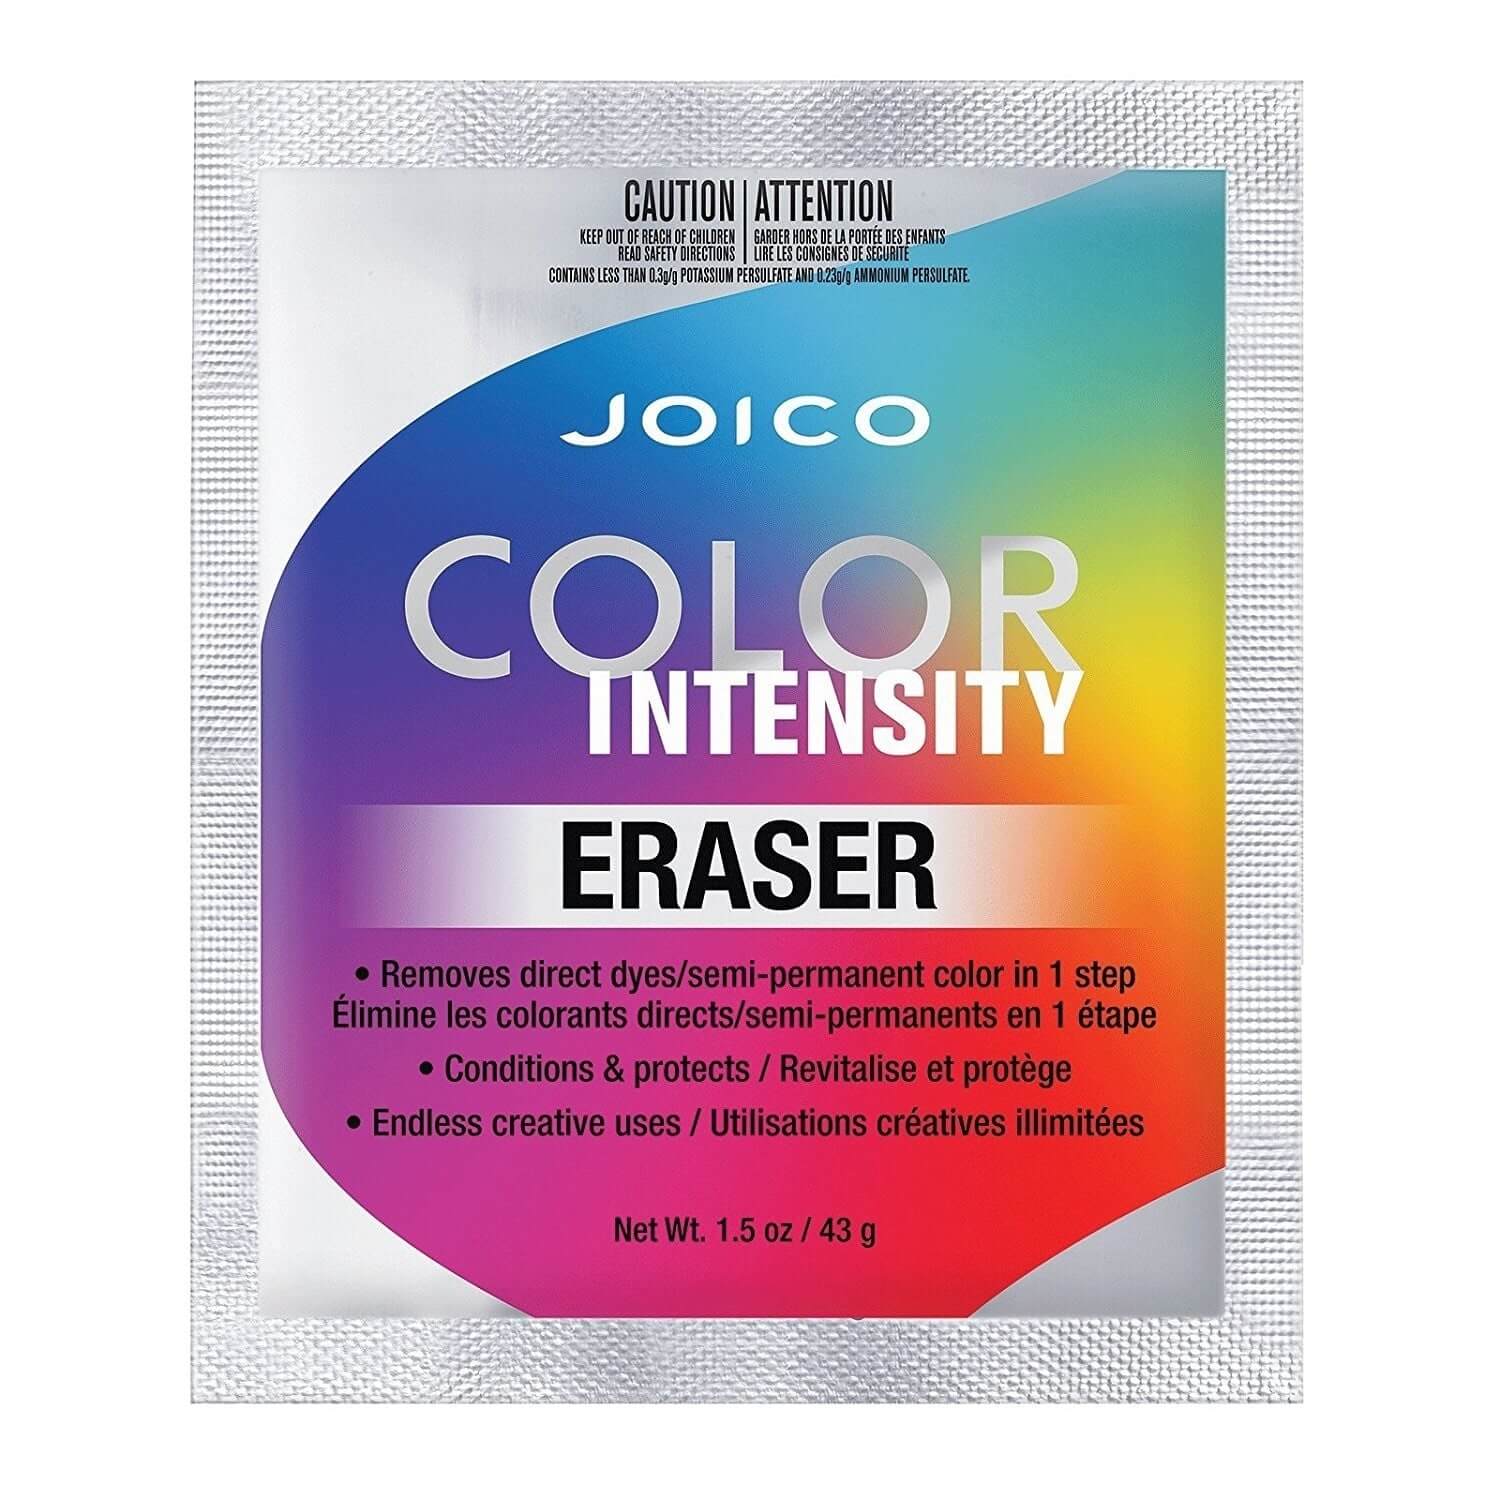 Joico Hair Color Intensity Eraser